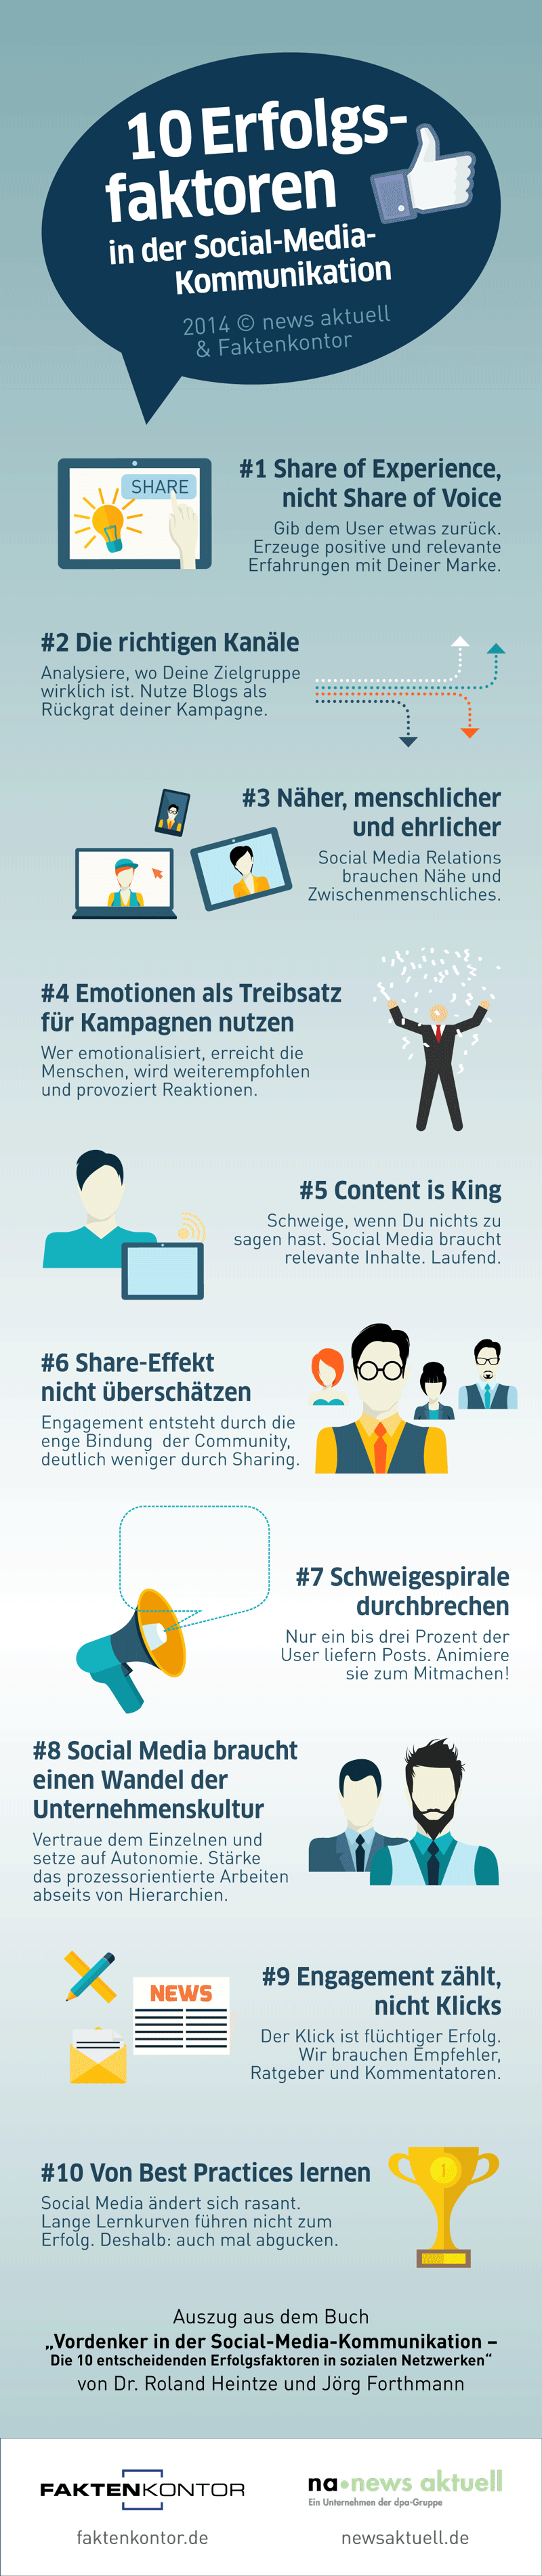 Infografik mit 10 Erfolgsfaktoren für Social Media